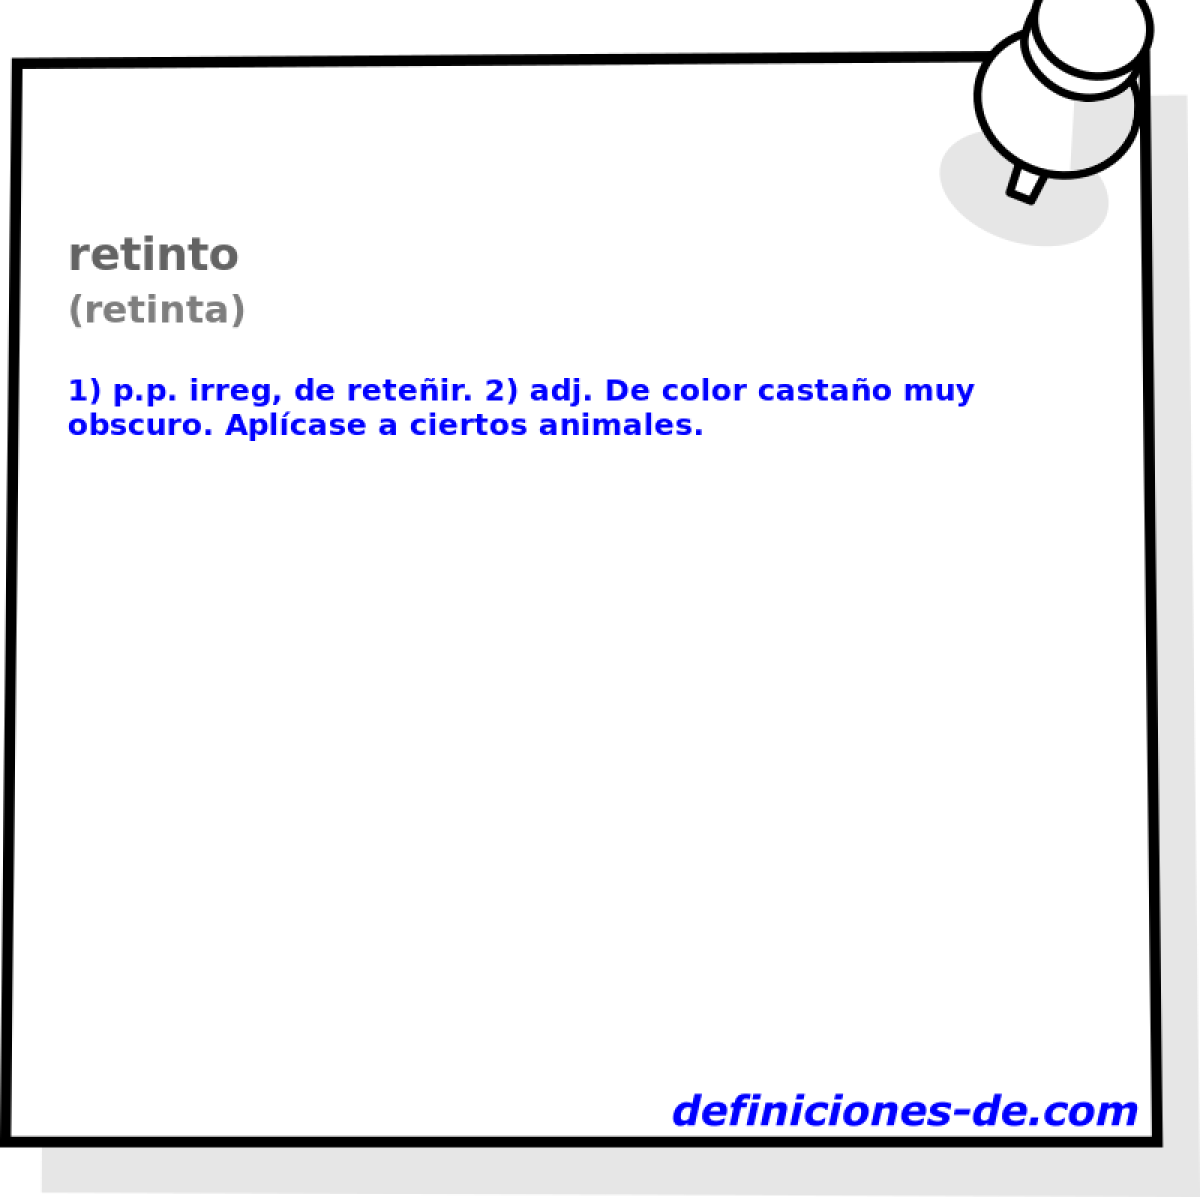 retinto (retinta)